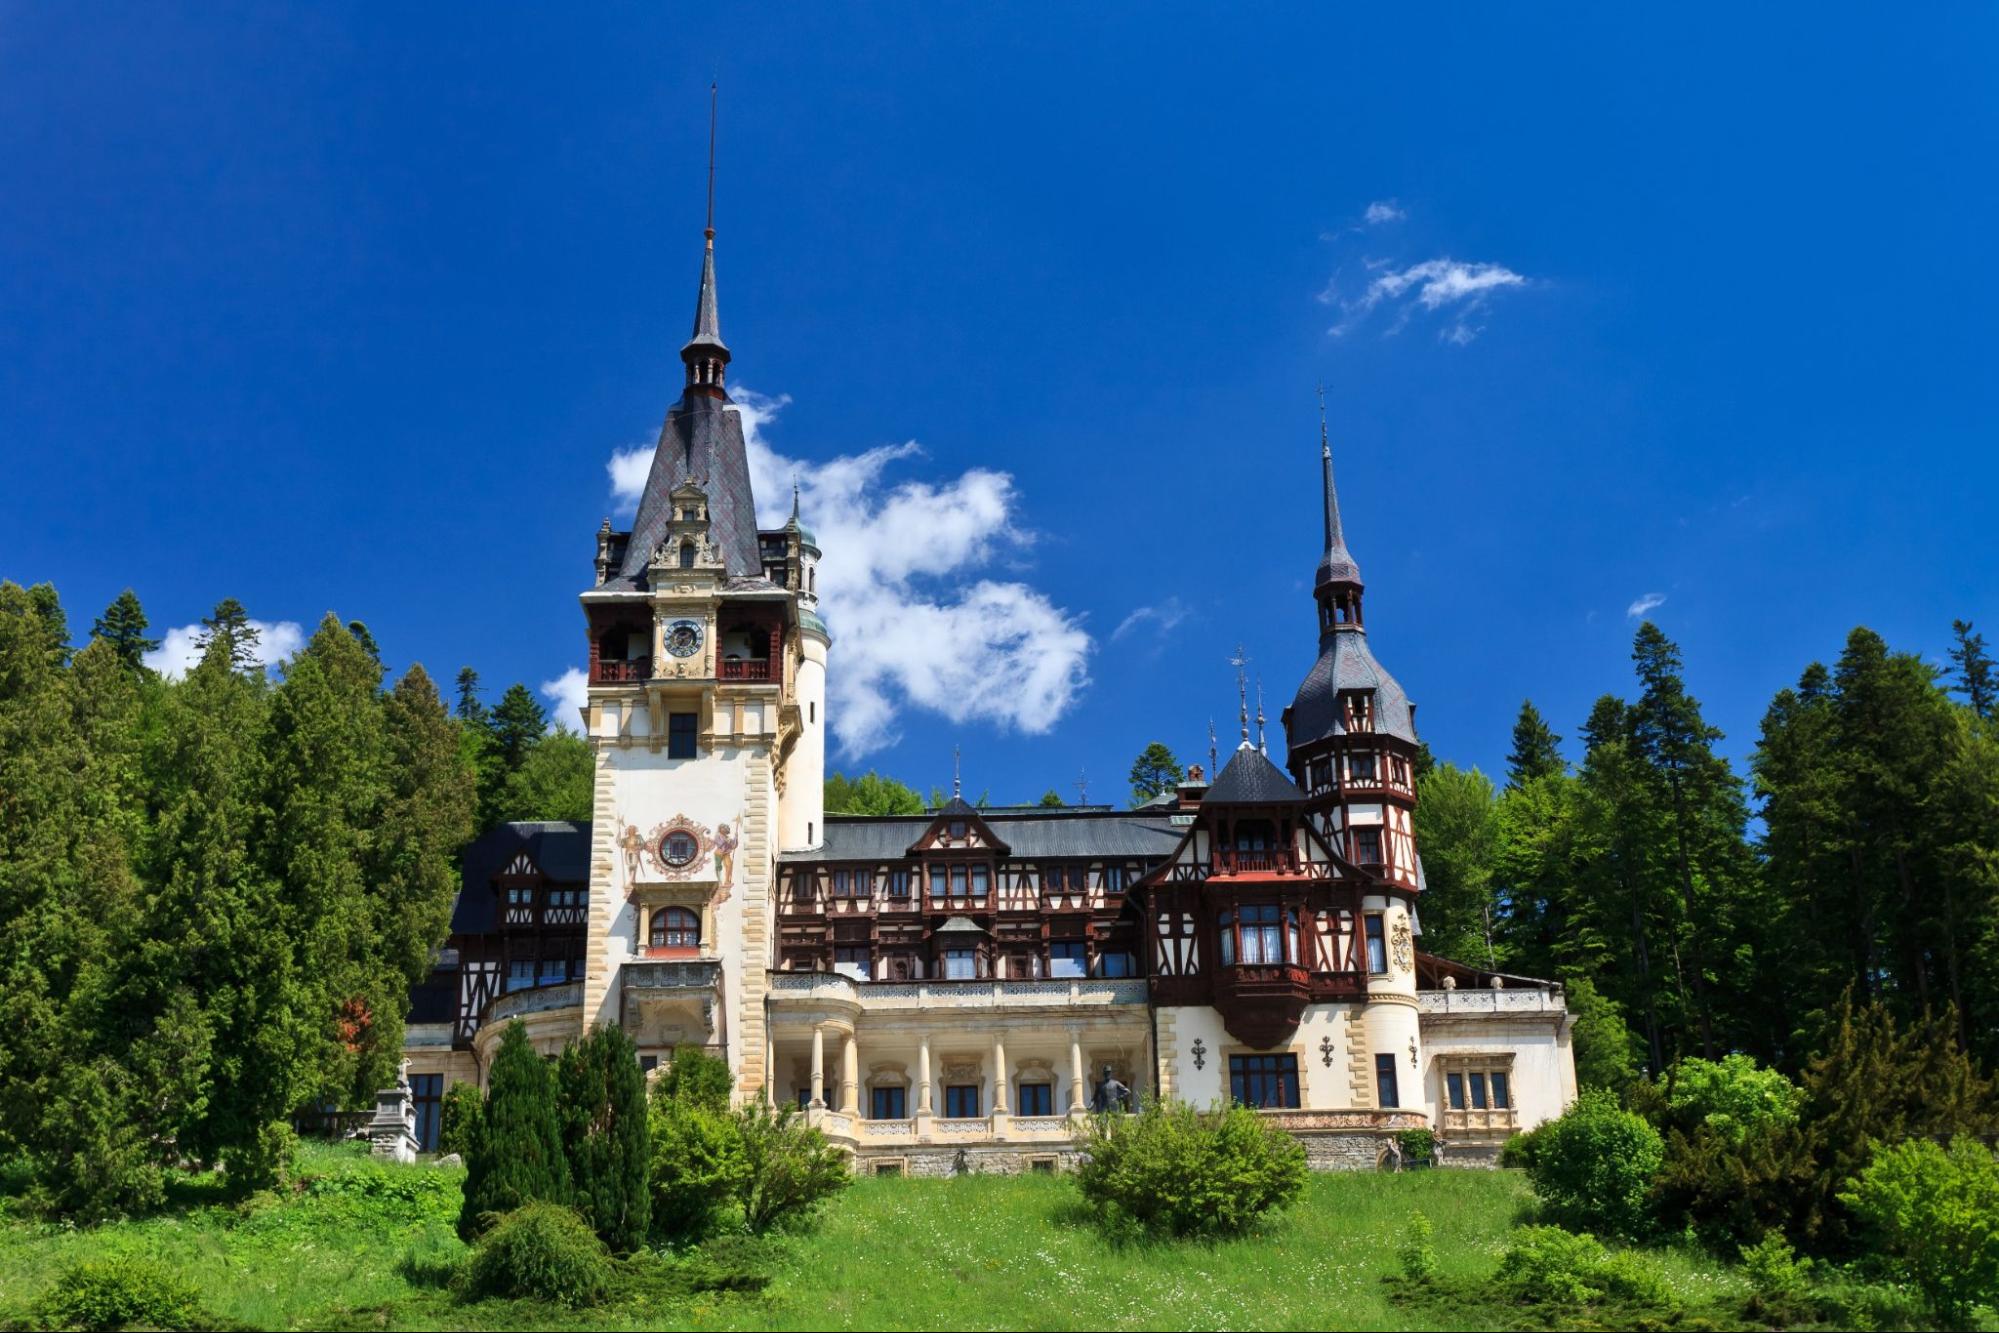 Romania, the former kingdom residence